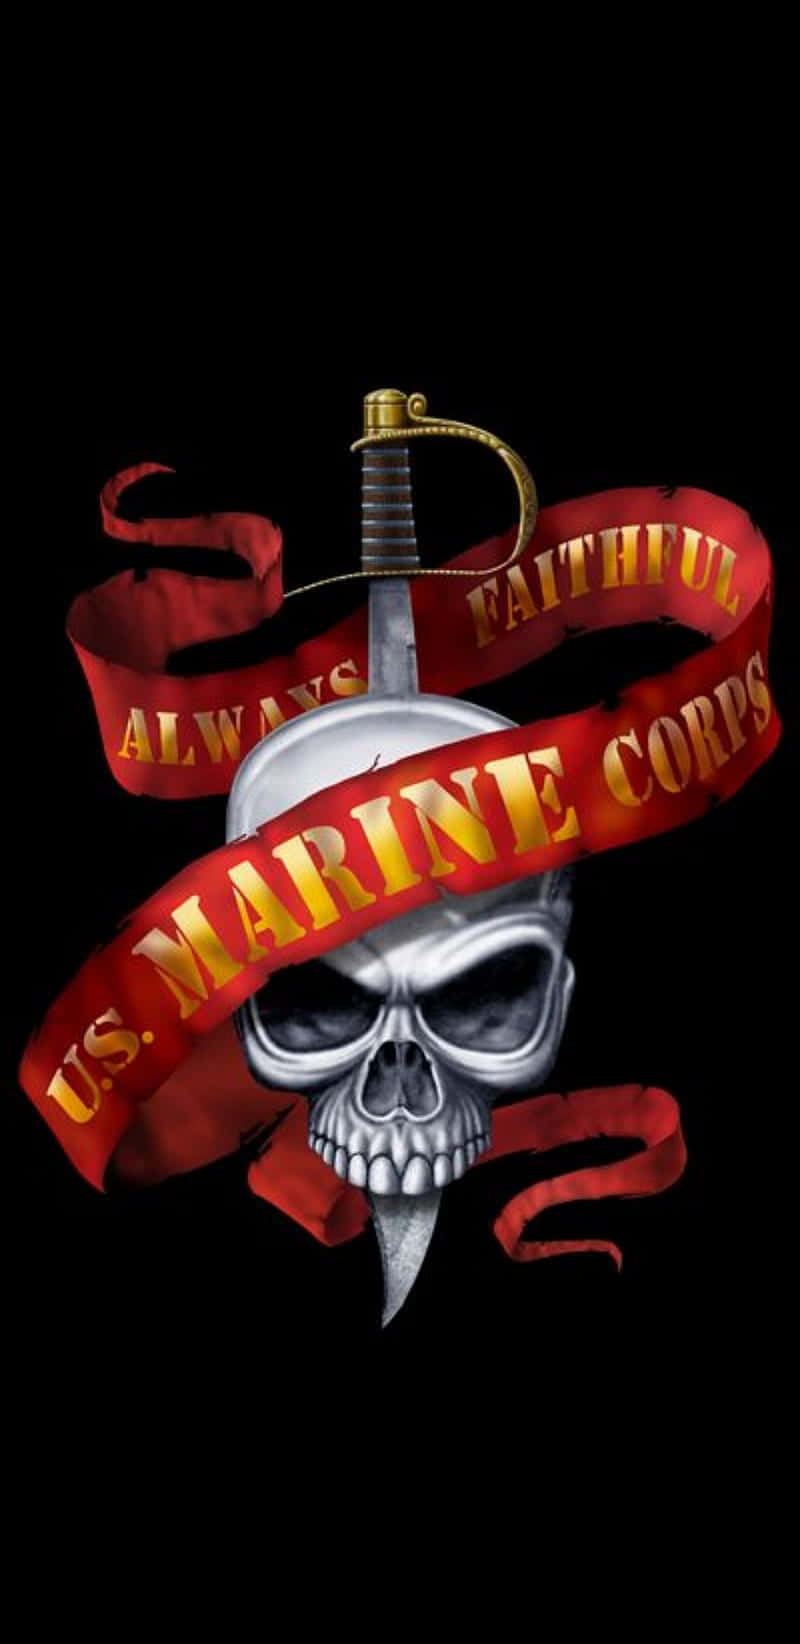 Oss Marine Corps Iphone 800 X 1644 Wallpaper